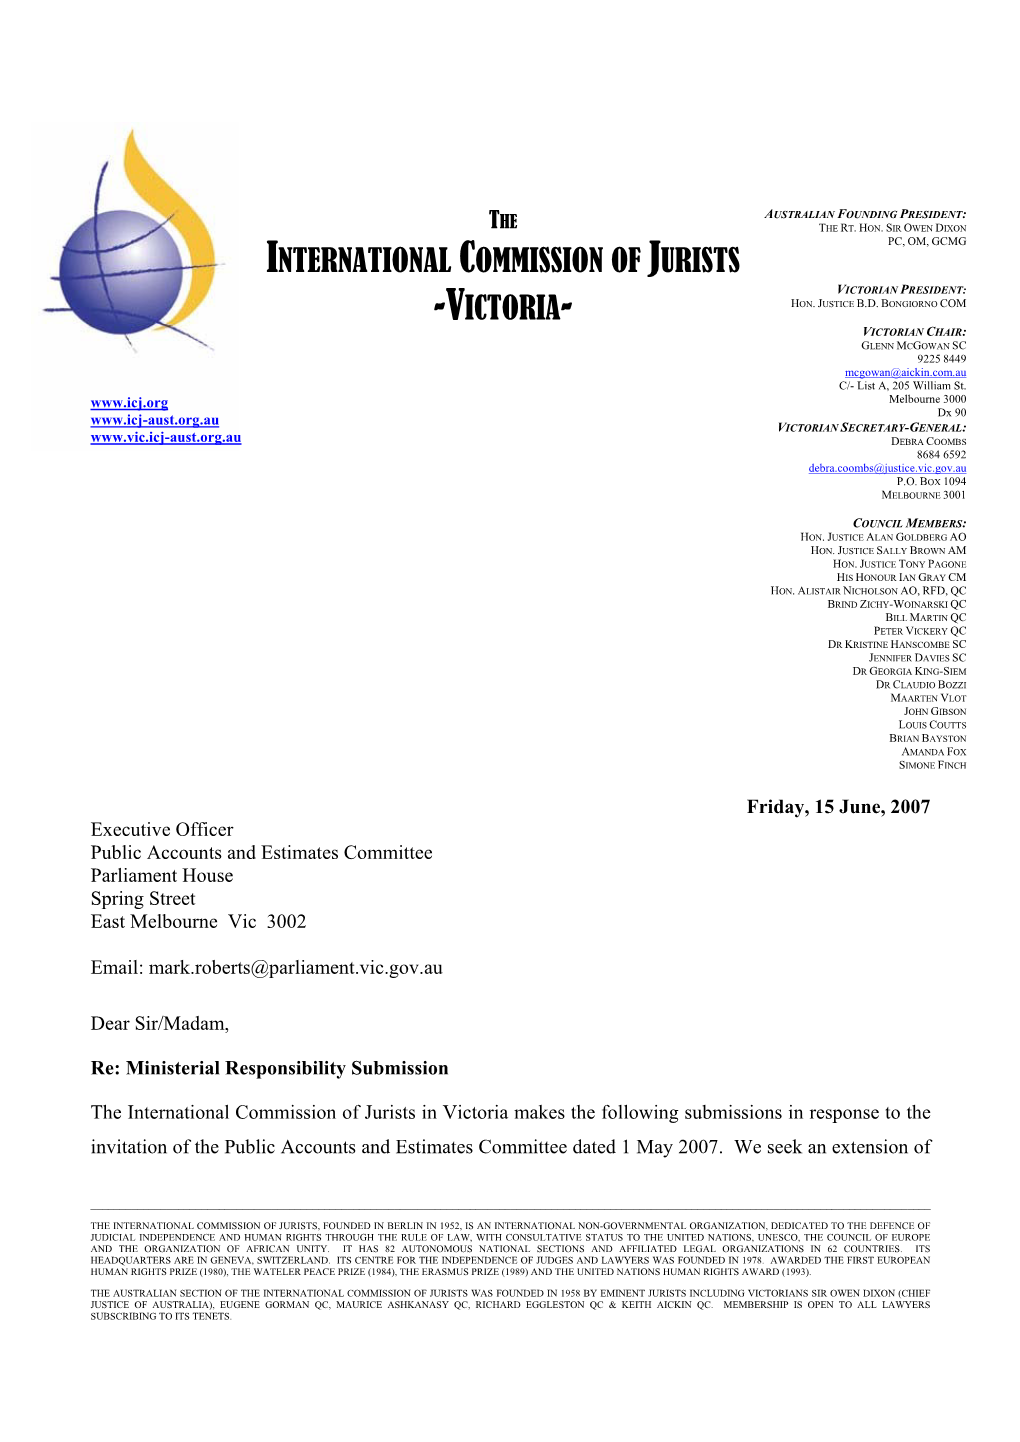 International Commission of Jurists Victorian President: Hon